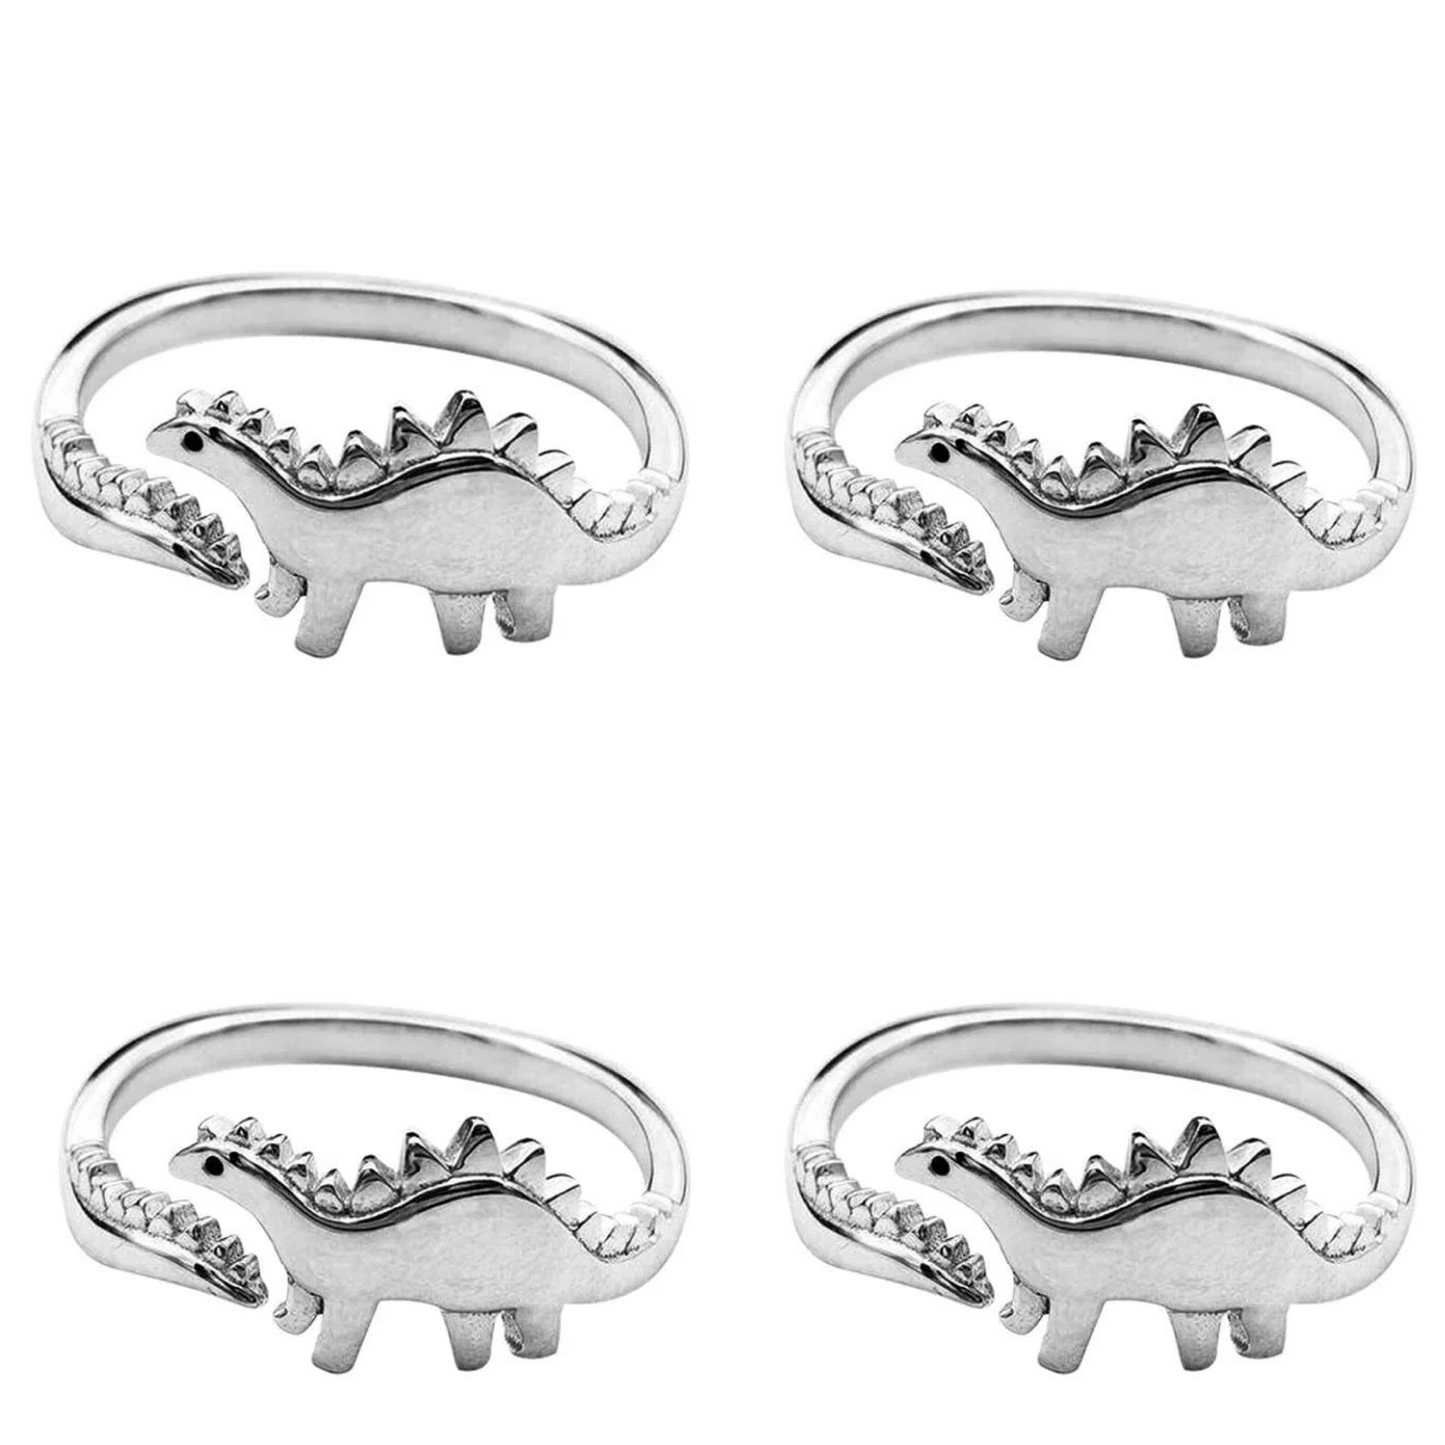 Dinosaur Rings